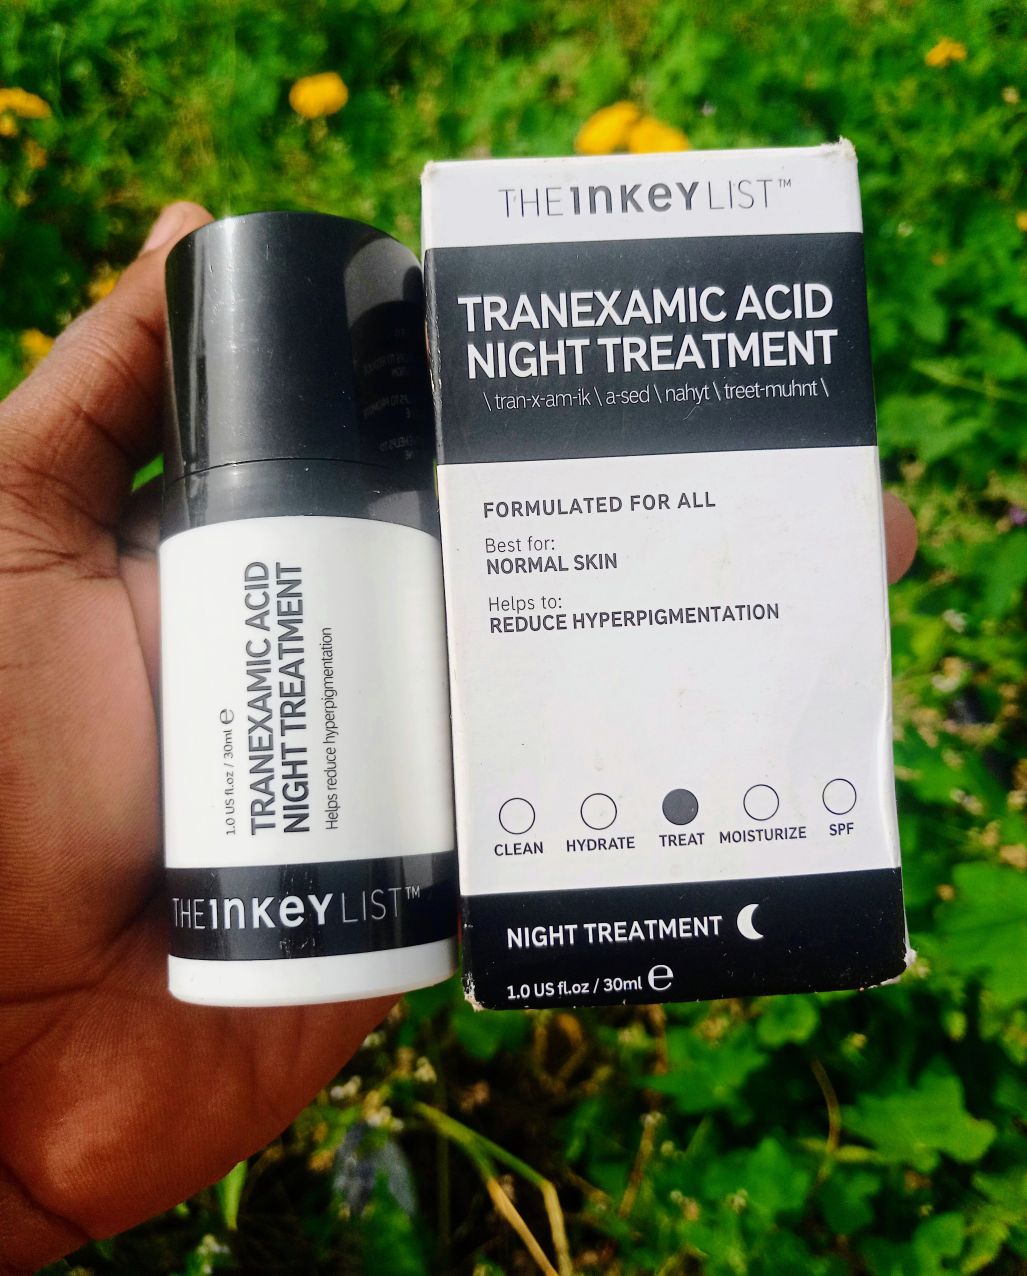 The Inkey List Tranexamic Acid Night Treatment review